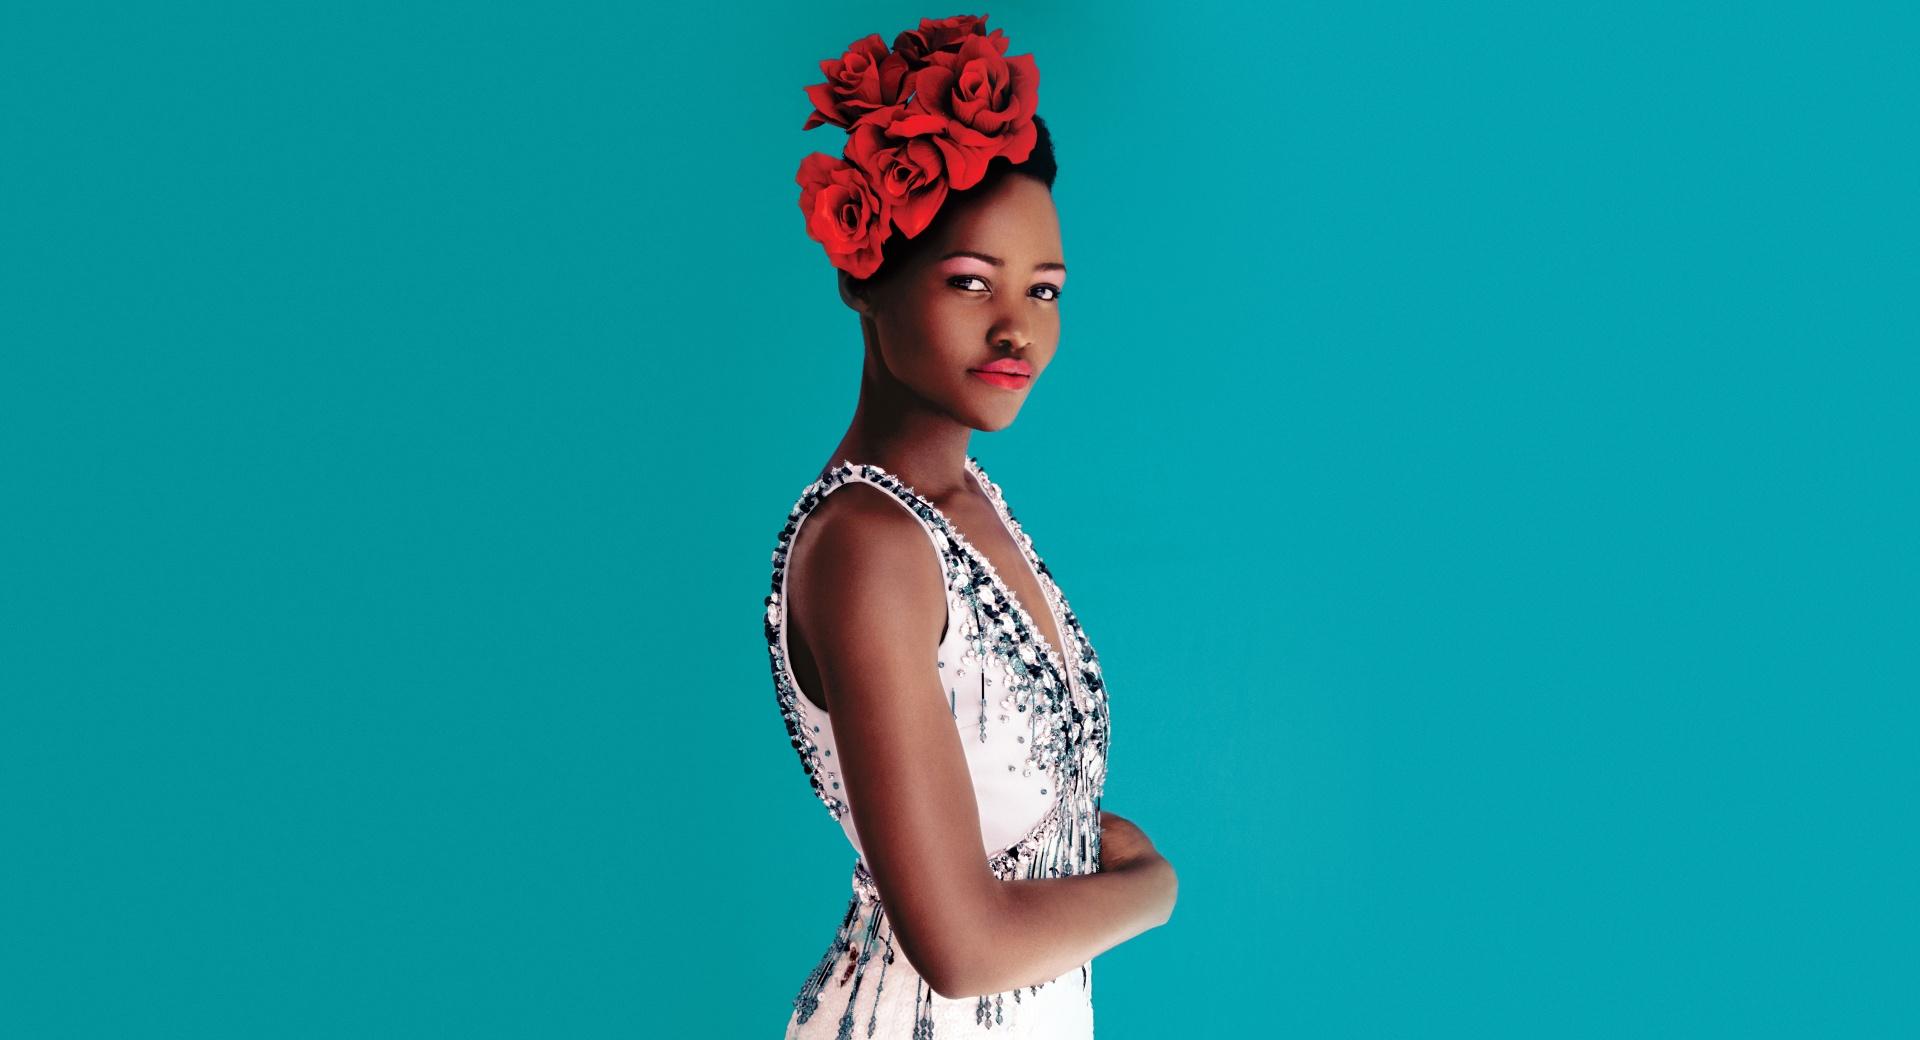 Lupita Nyongo Dress at 1334 x 750 iPhone 7 size wallpapers HD quality